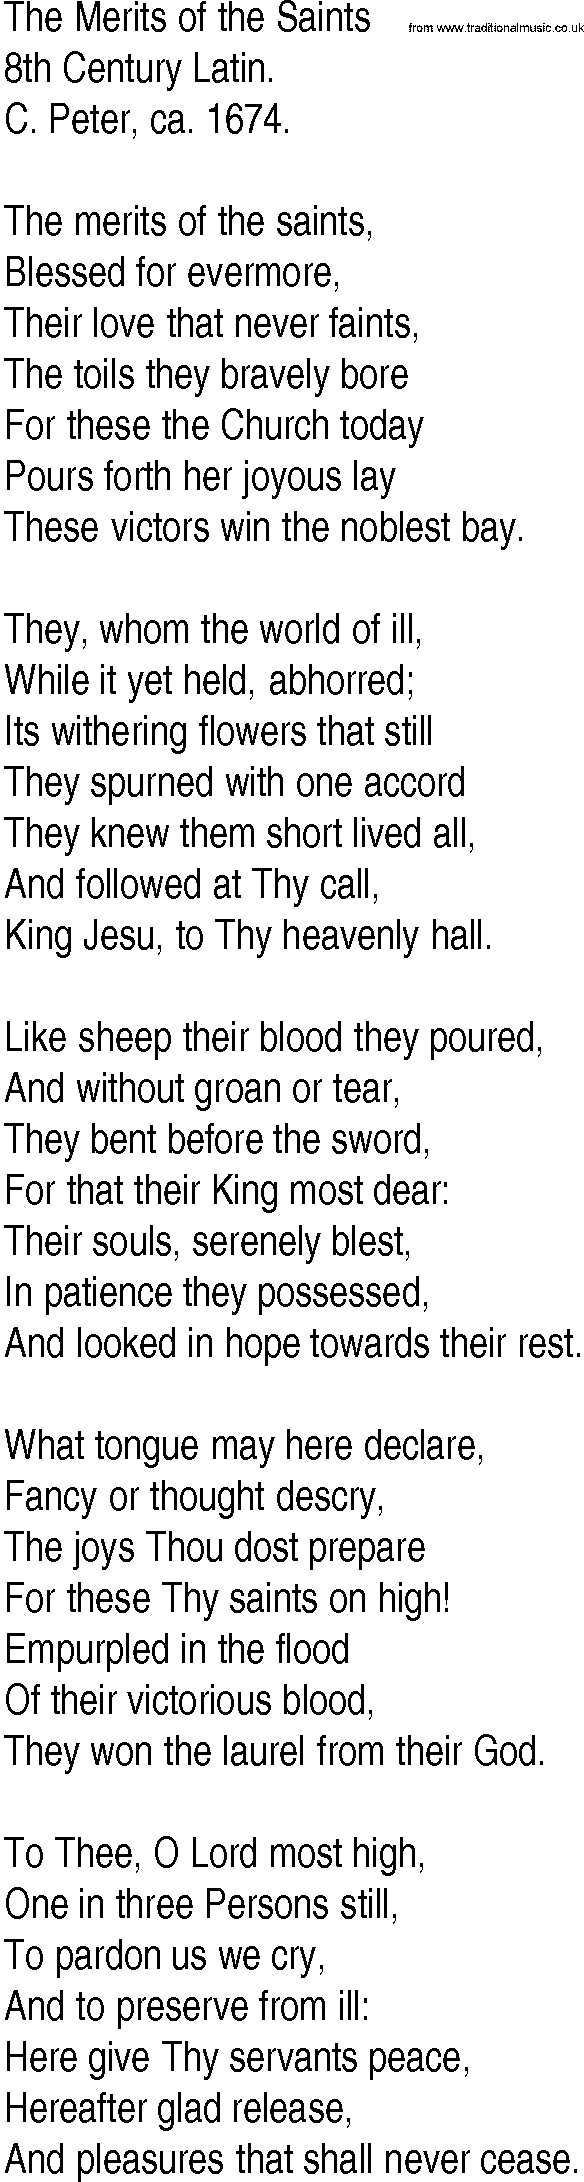 Hymn and Gospel Song: The Merits of the Saints by th Century Latin lyrics